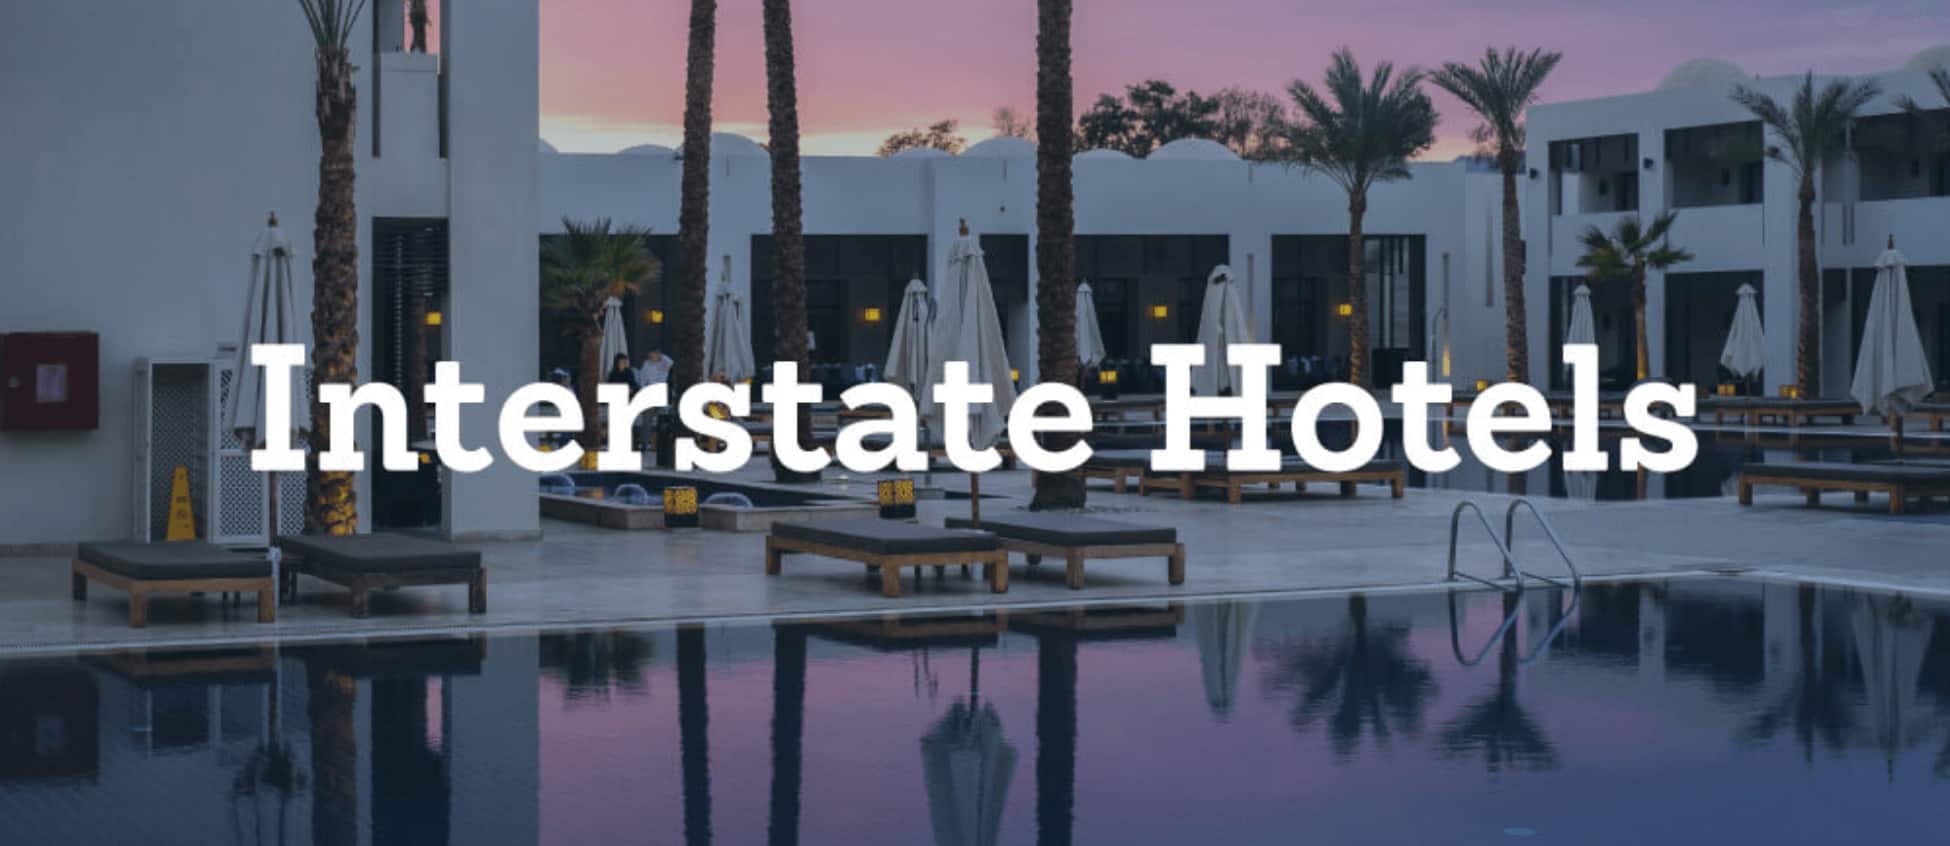 Interstate Hotels Case Study